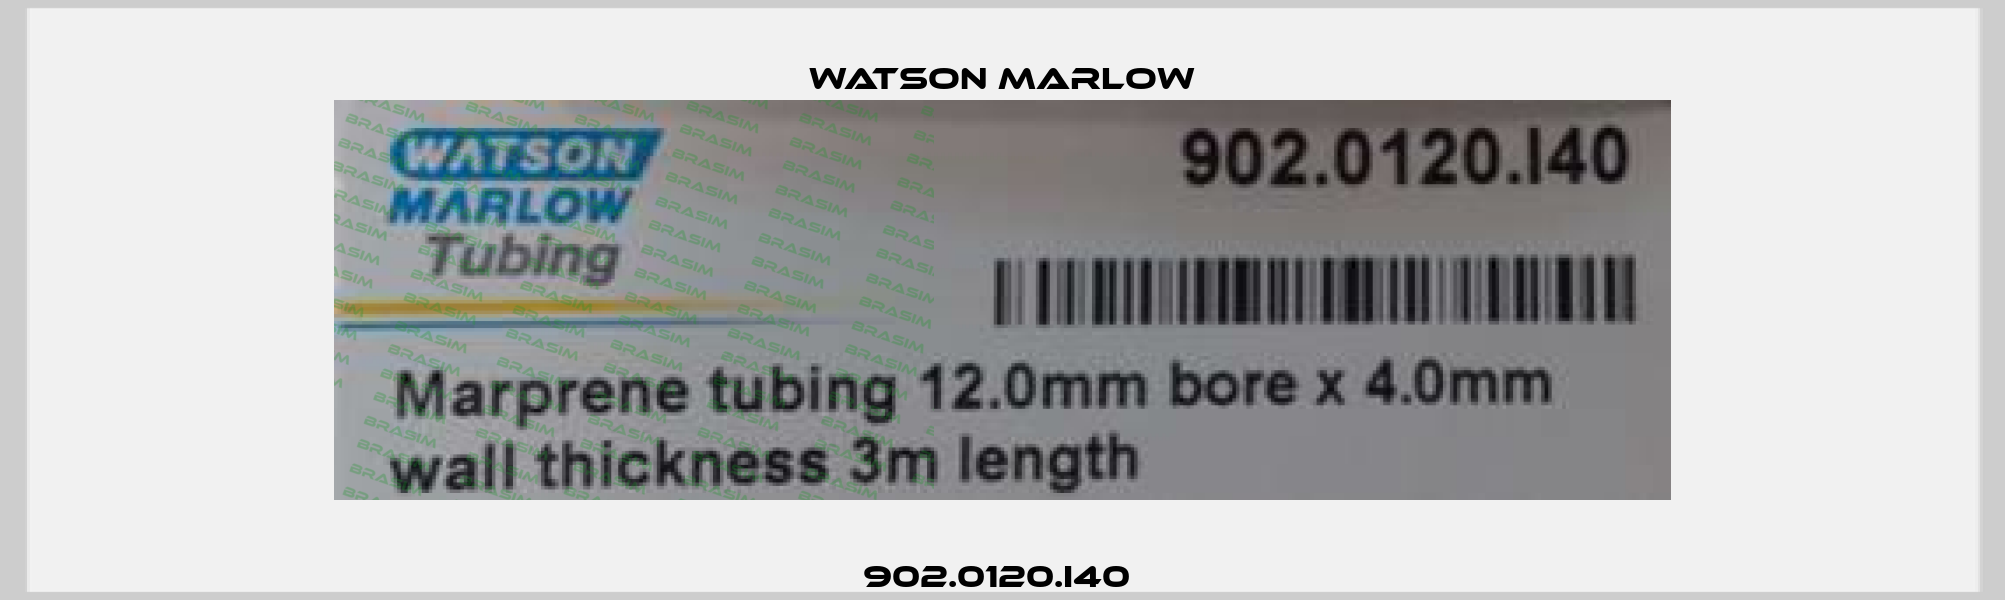 902.0120.I40  Watson Marlow